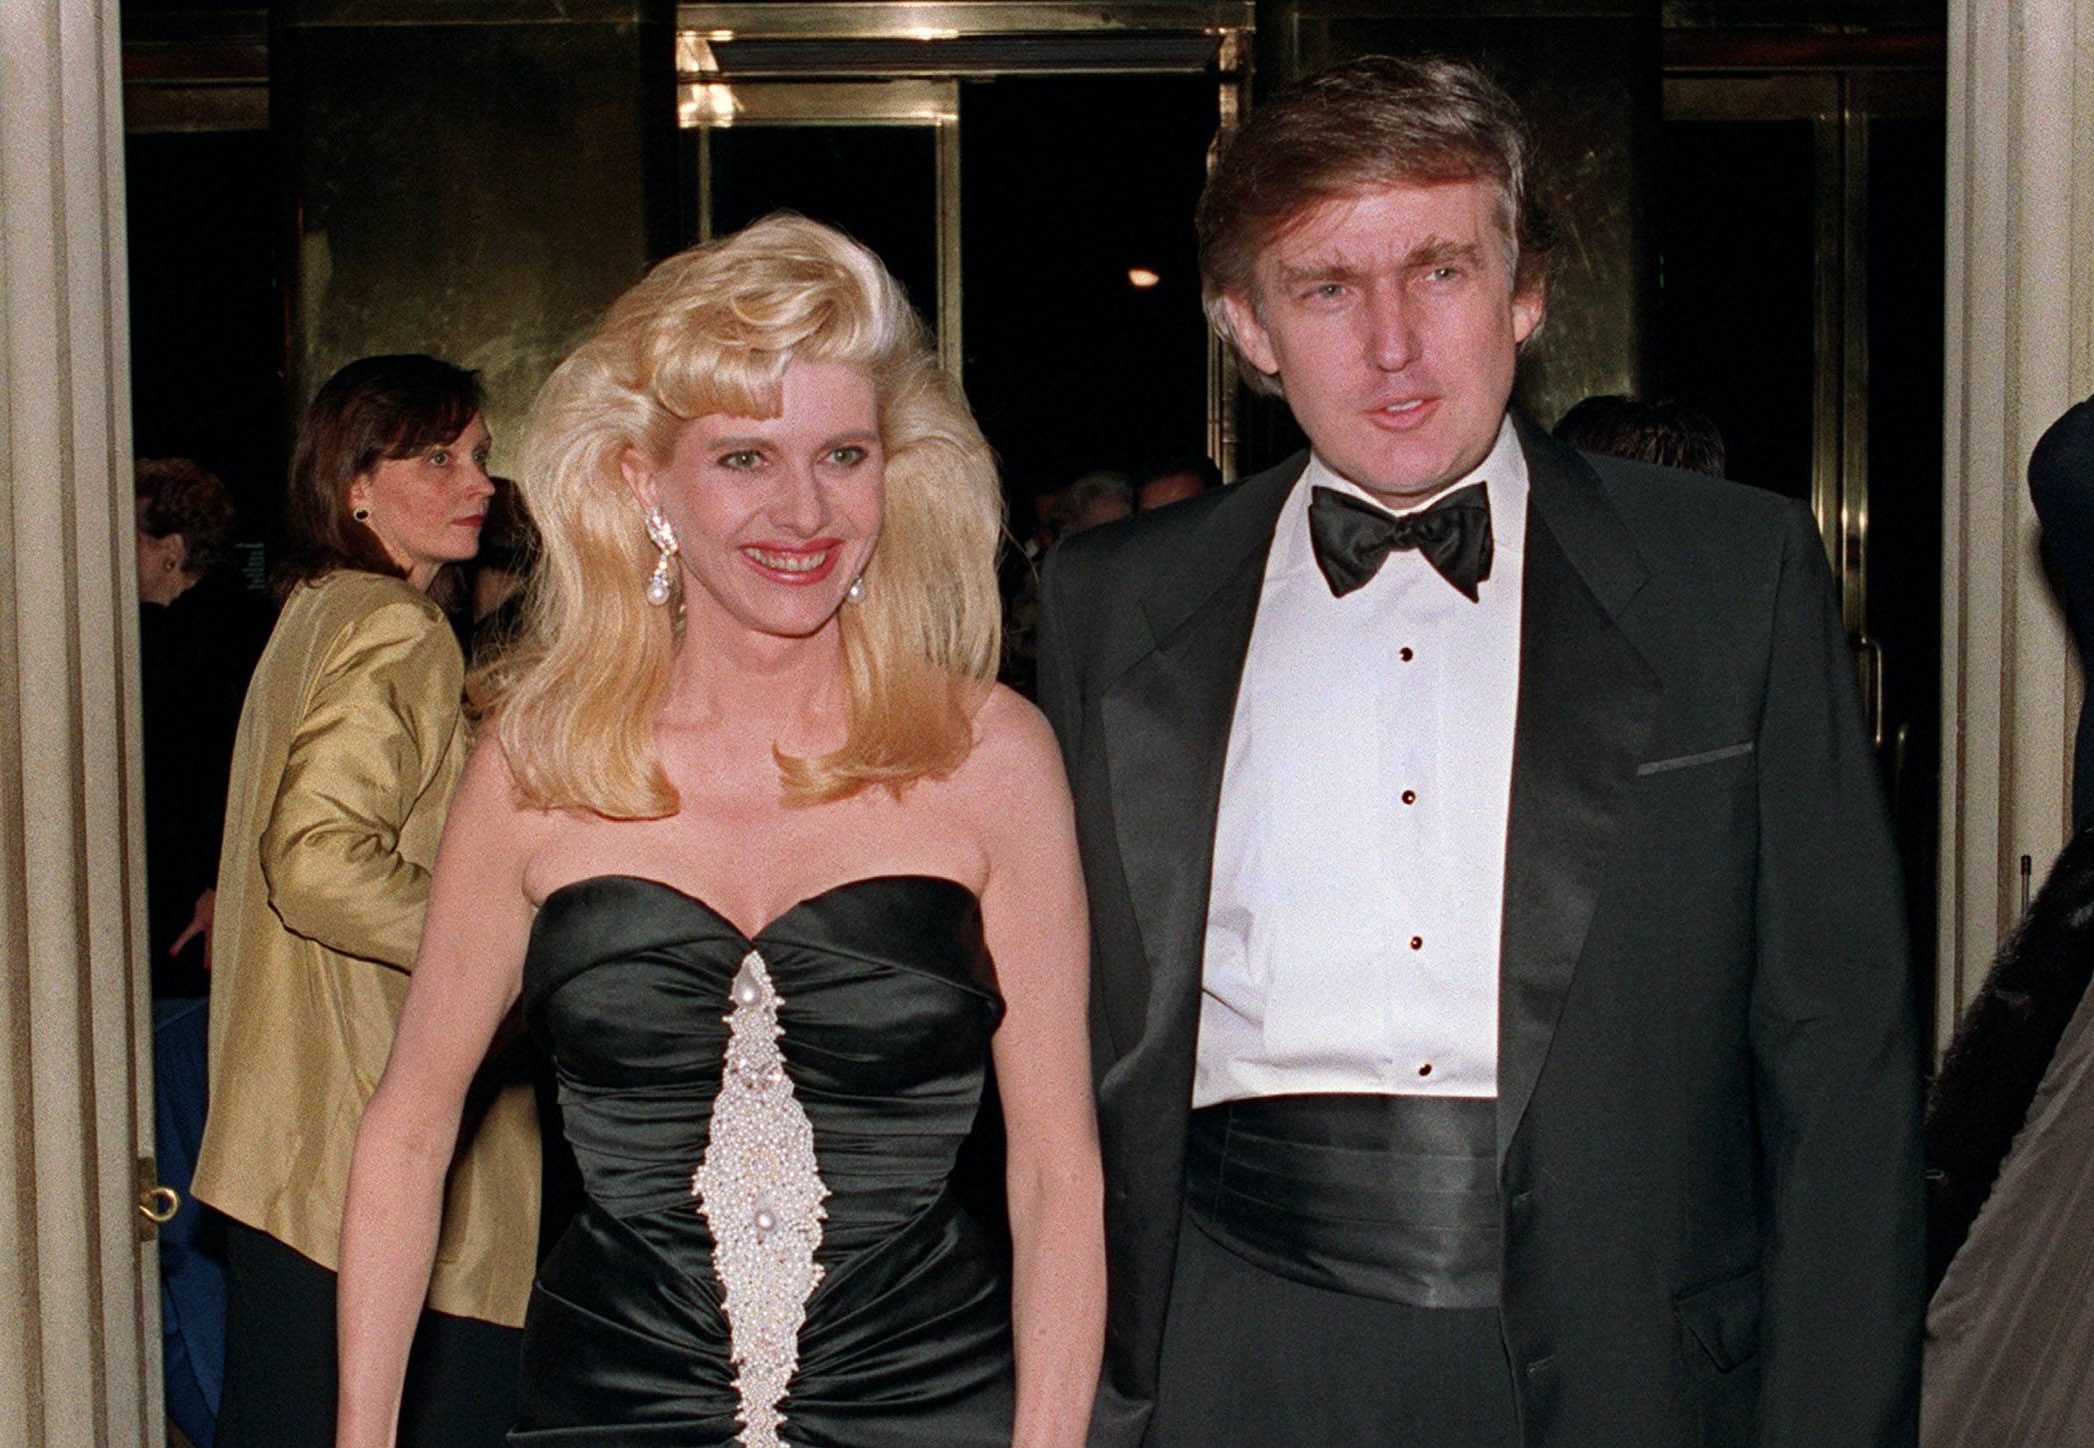 The Embarrassing Ways Trump Met His Wives